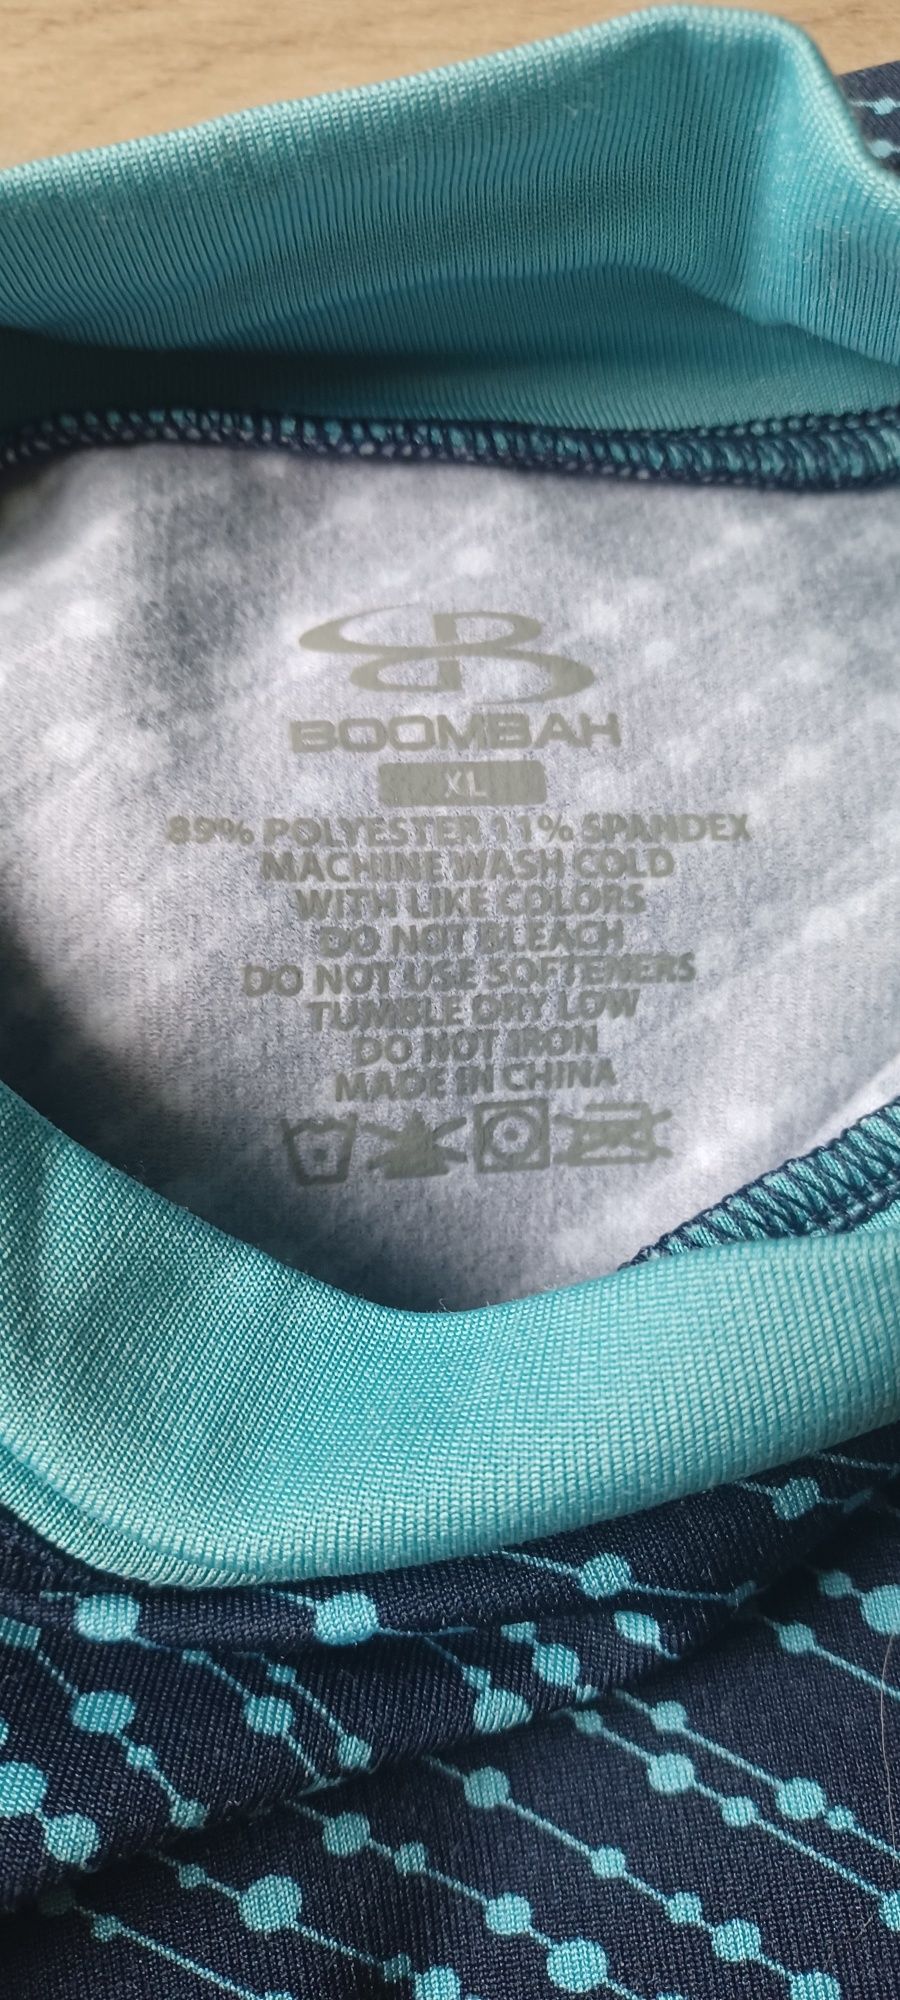 Bluza/koszulka sportowa Boombah